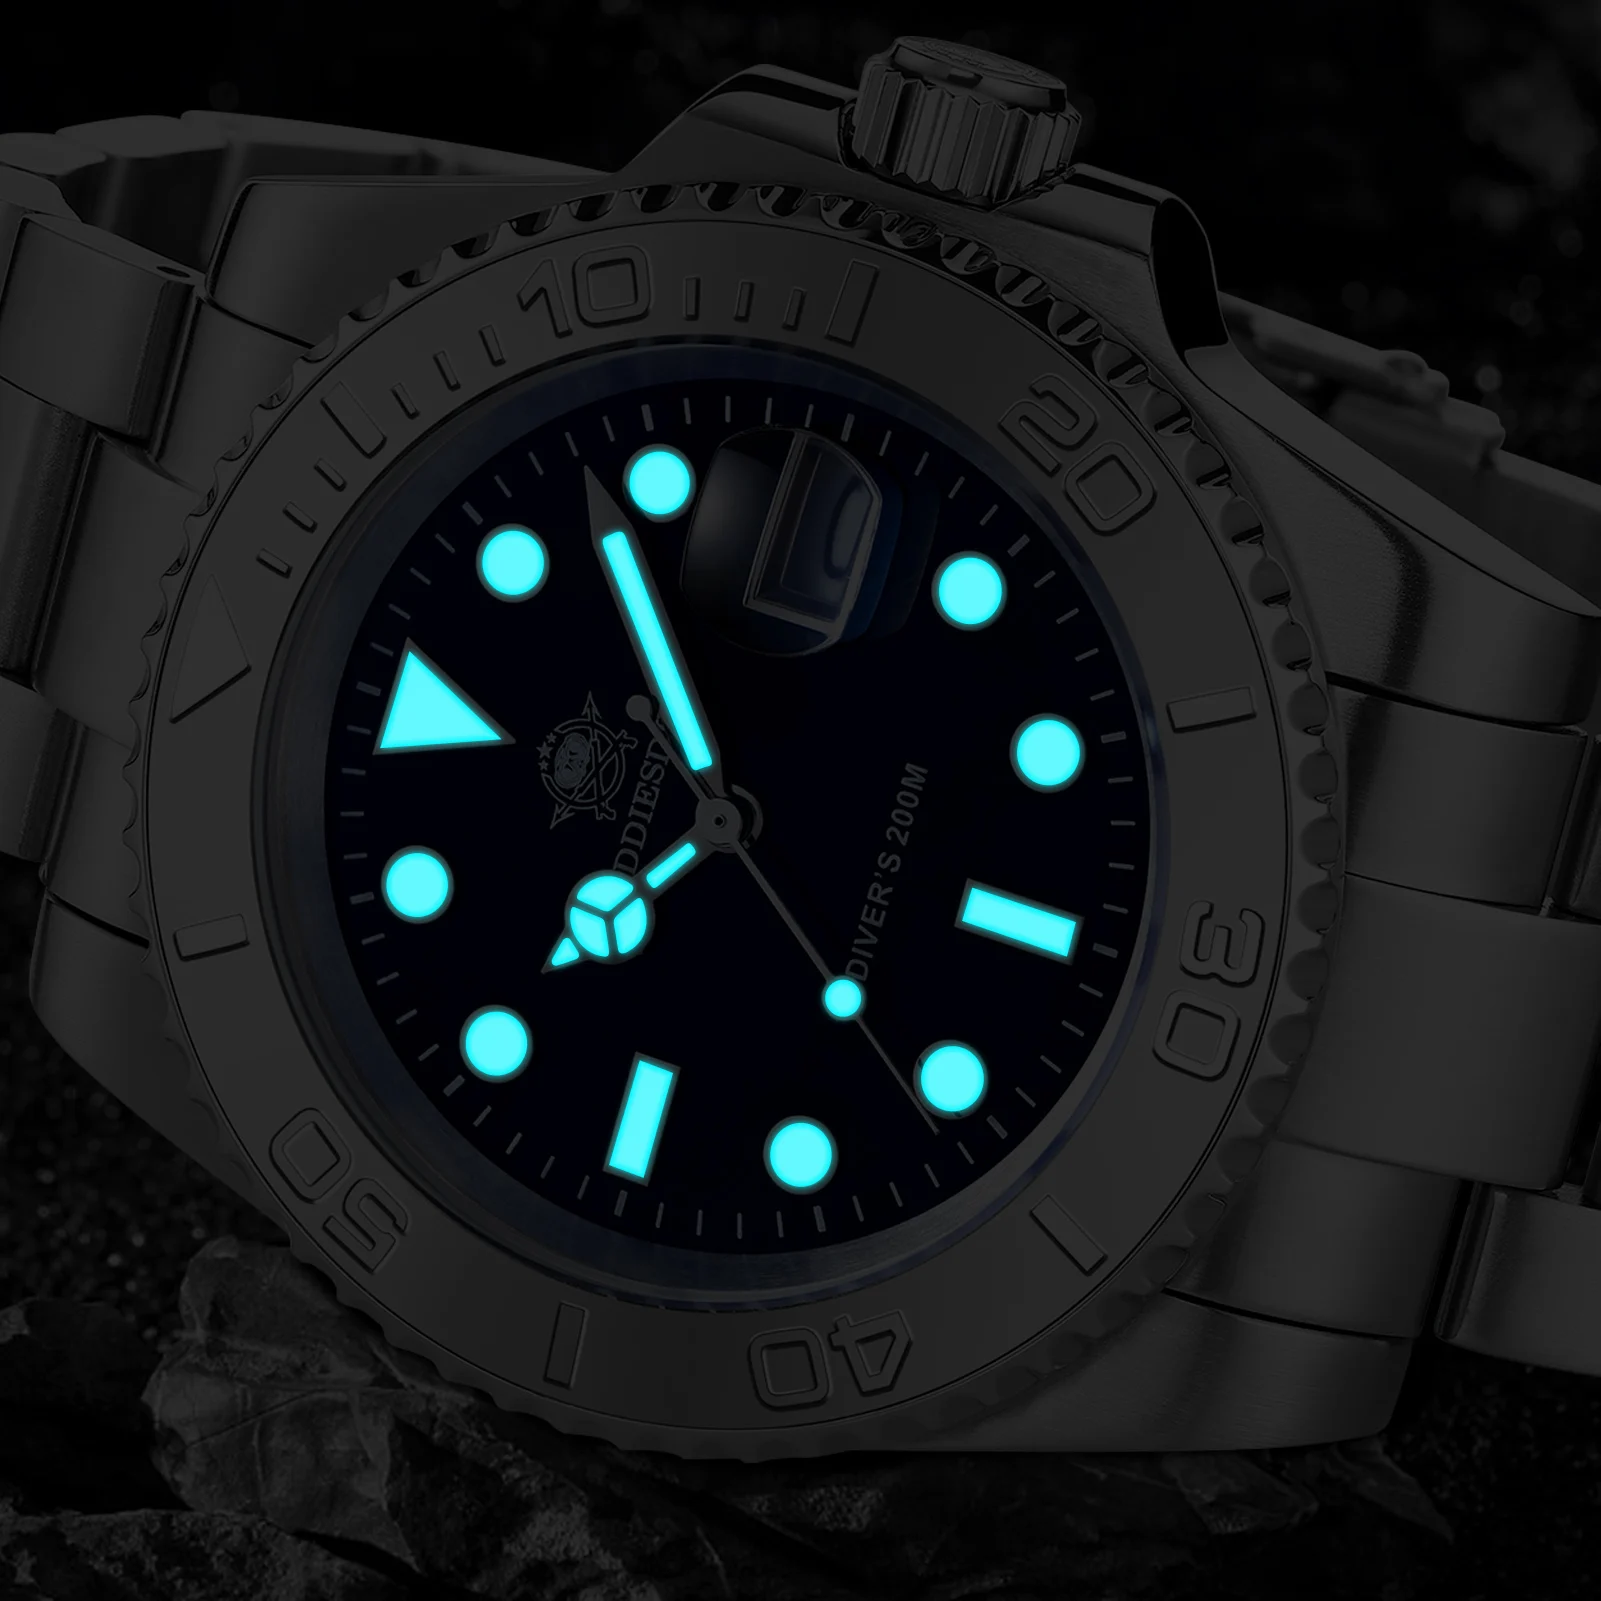 ADDIESIDVE Men's Stainless Steel Watch 200m Diver BGW9 Super Luminous Reloj Hombre European and American Business Quartz Watch